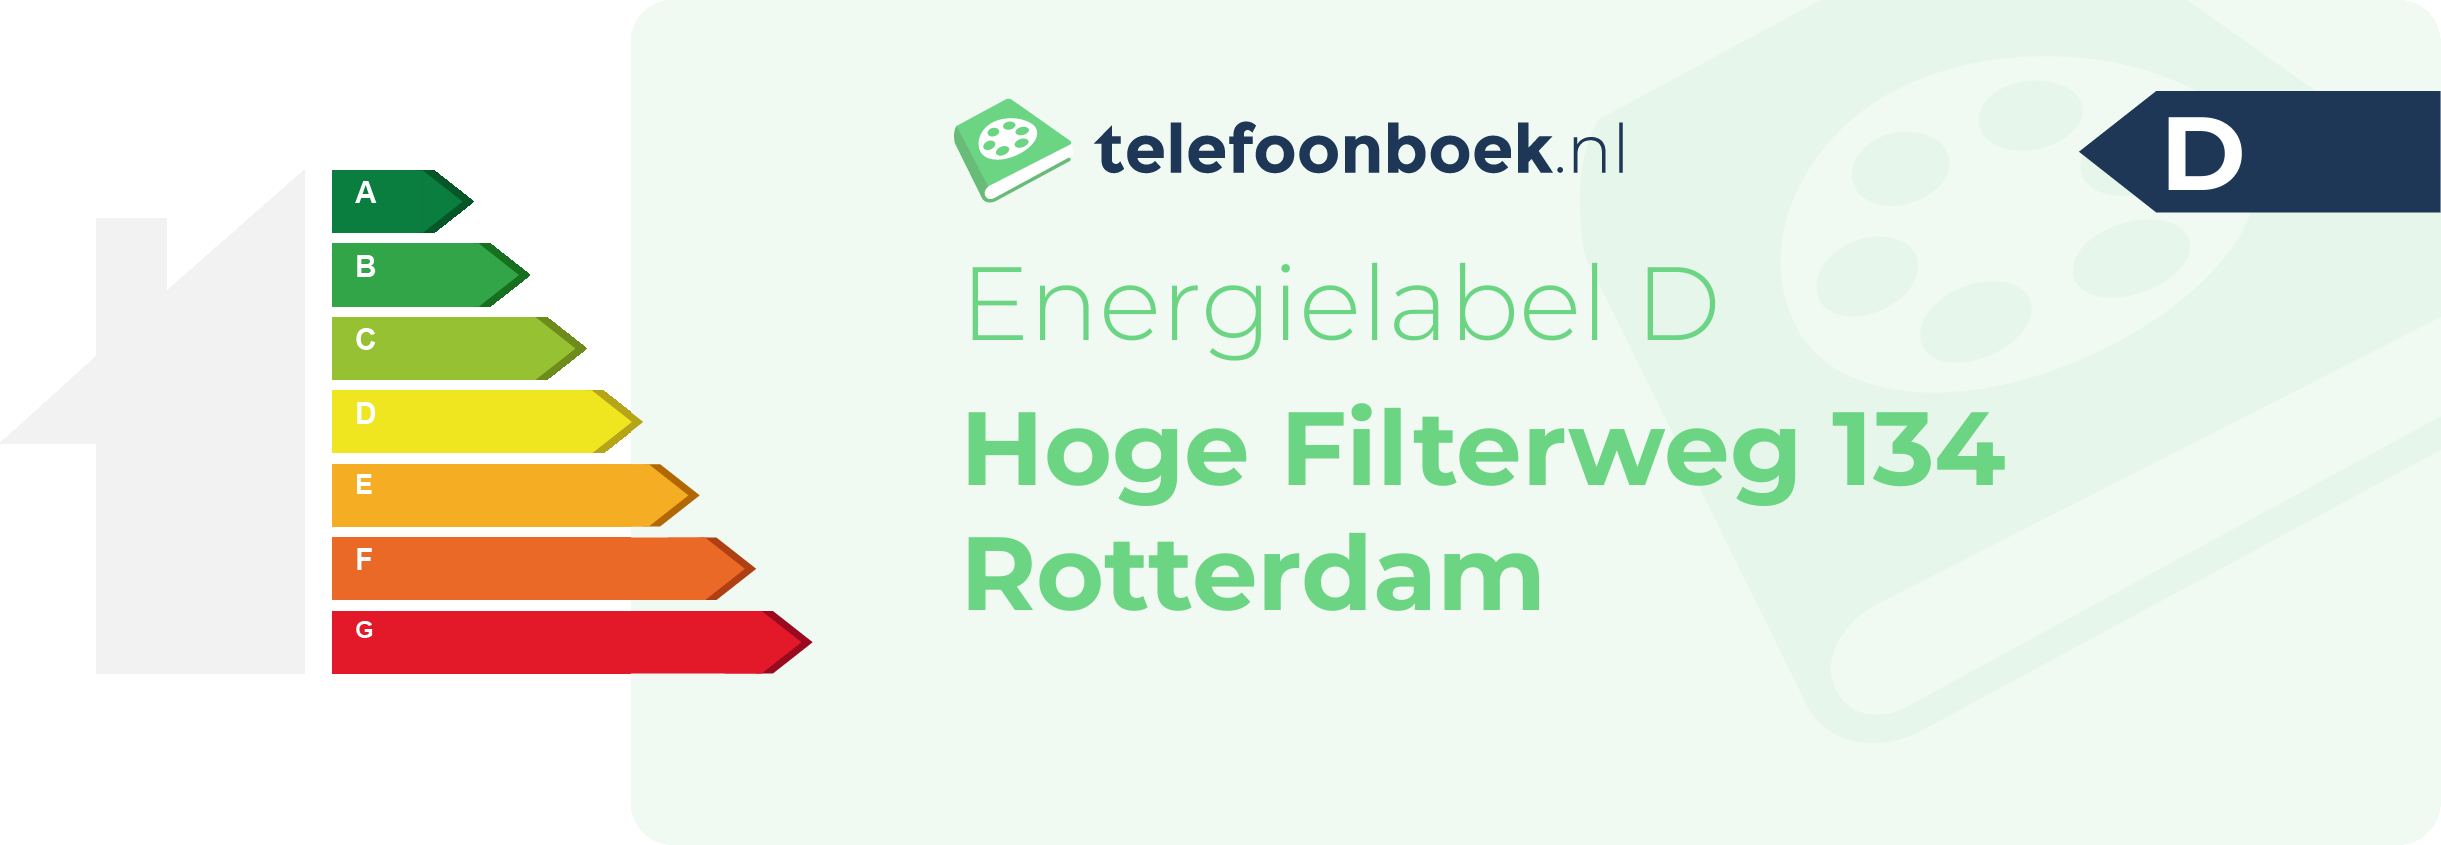 Energielabel Hoge Filterweg 134 Rotterdam